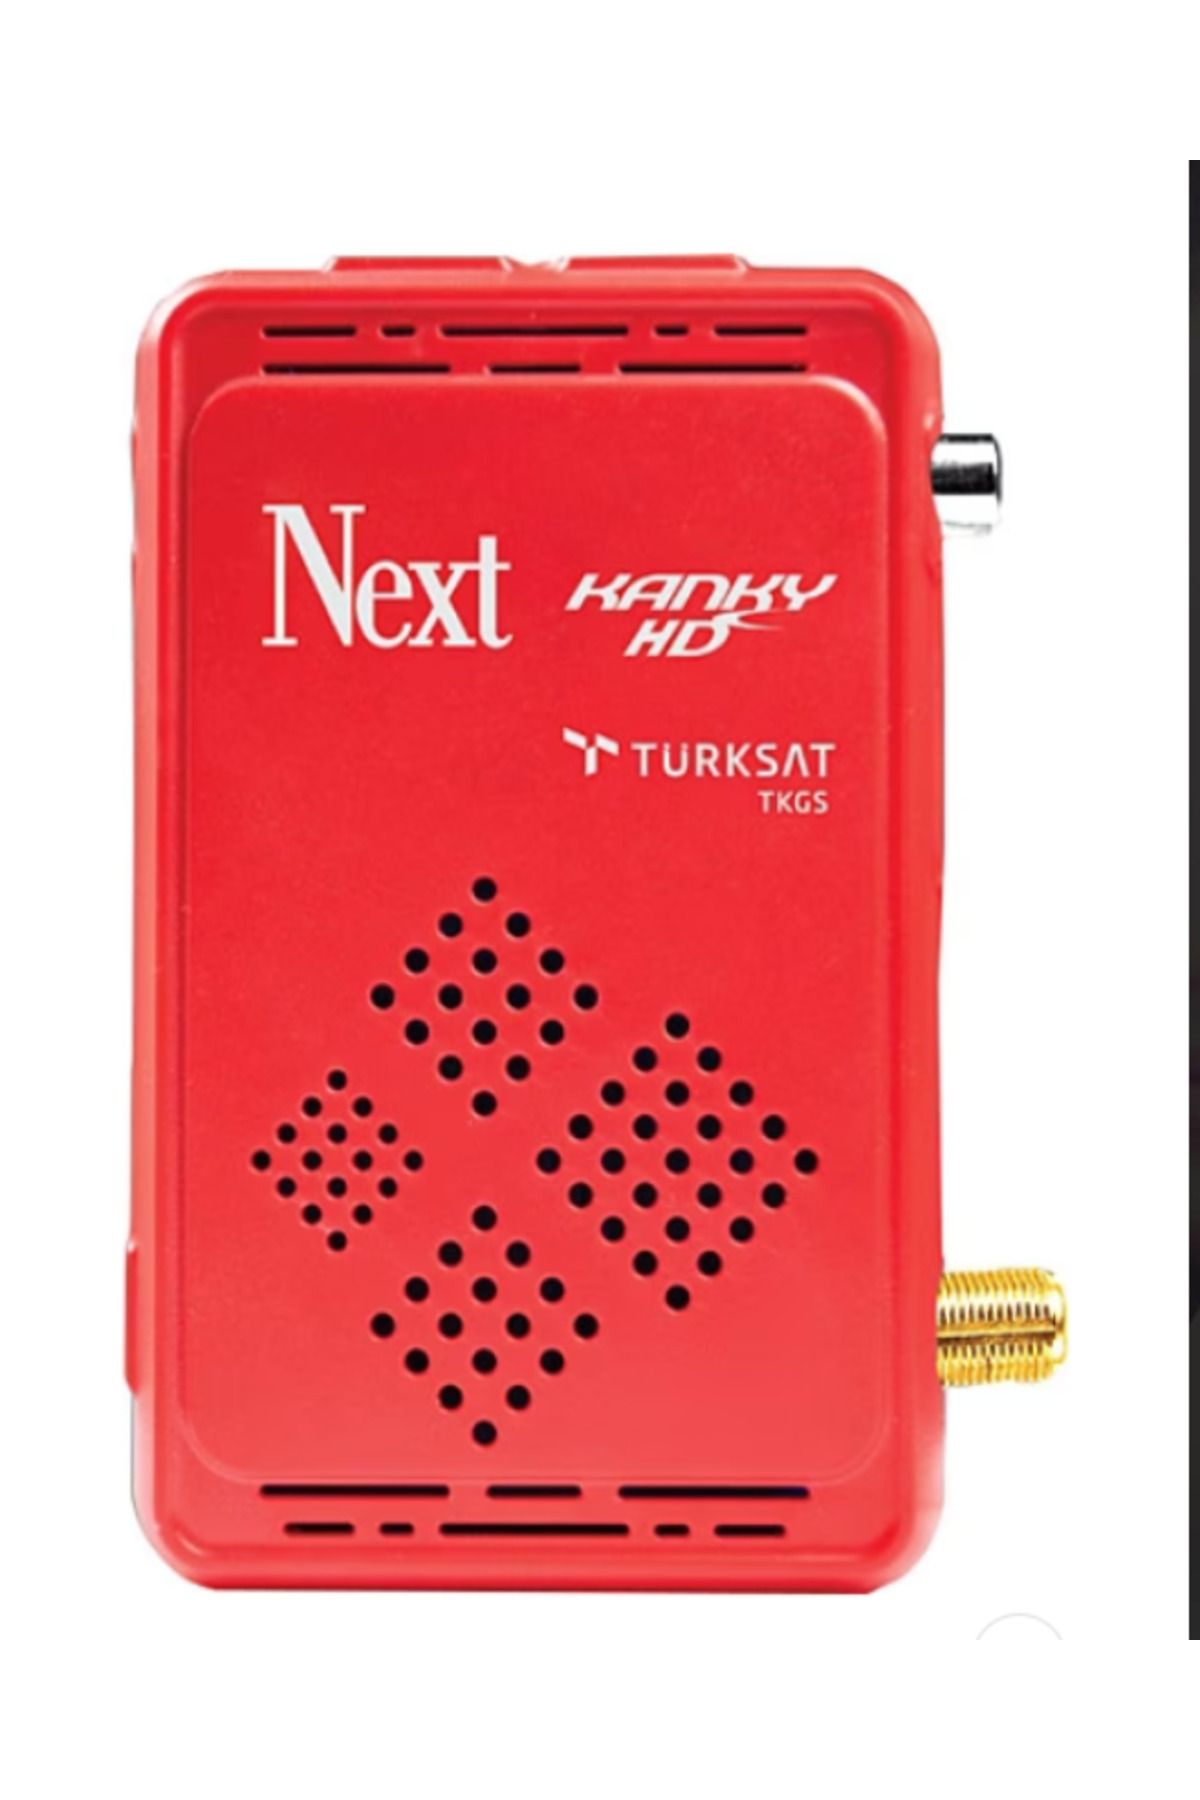 Next Nextstar Next Kanky HD Mini Uydu Alıcısı